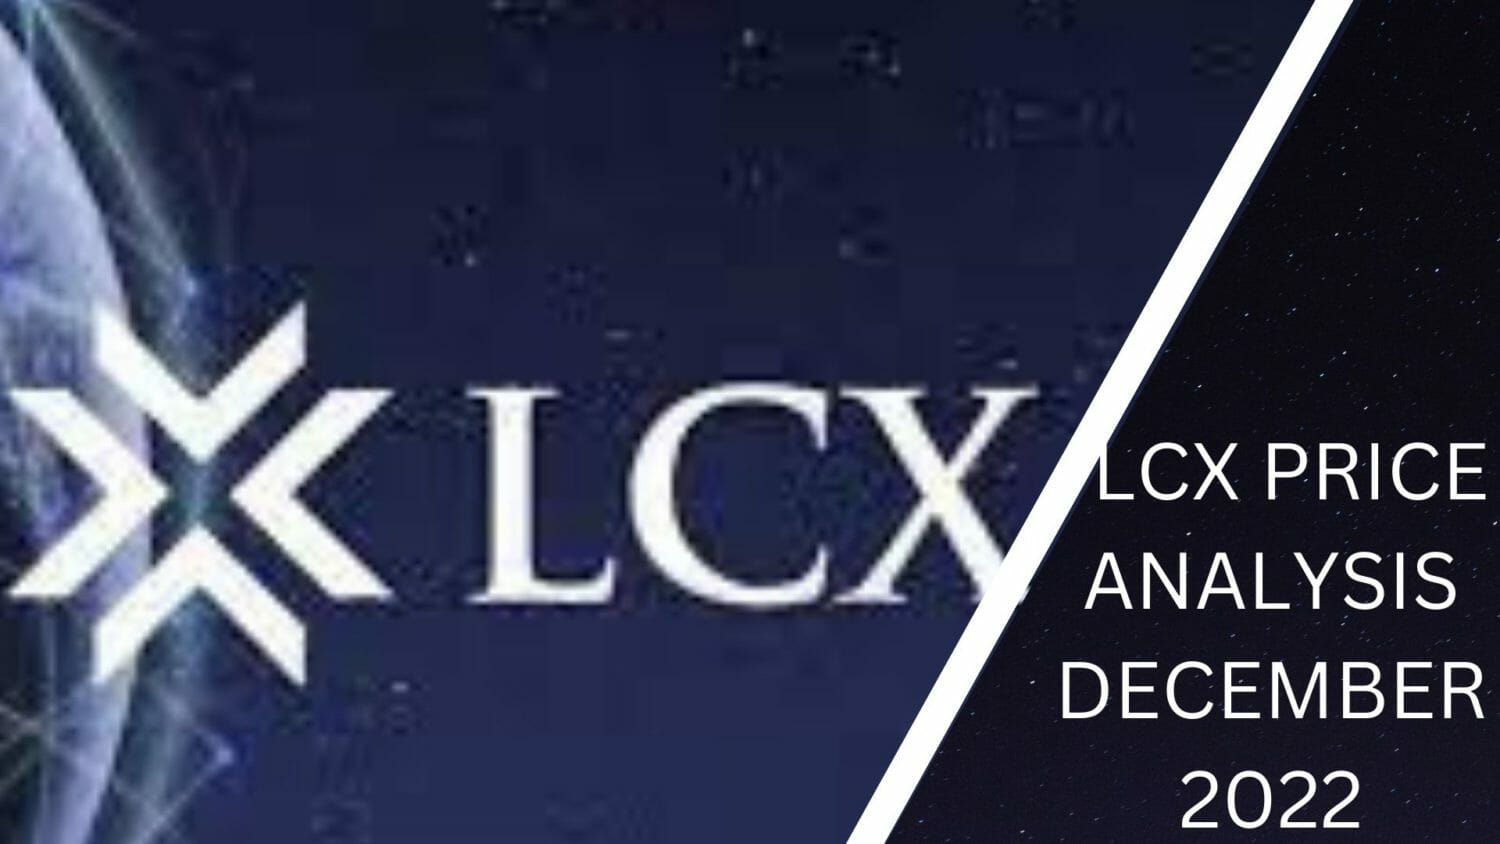 Lcx Price Analysis December 2022